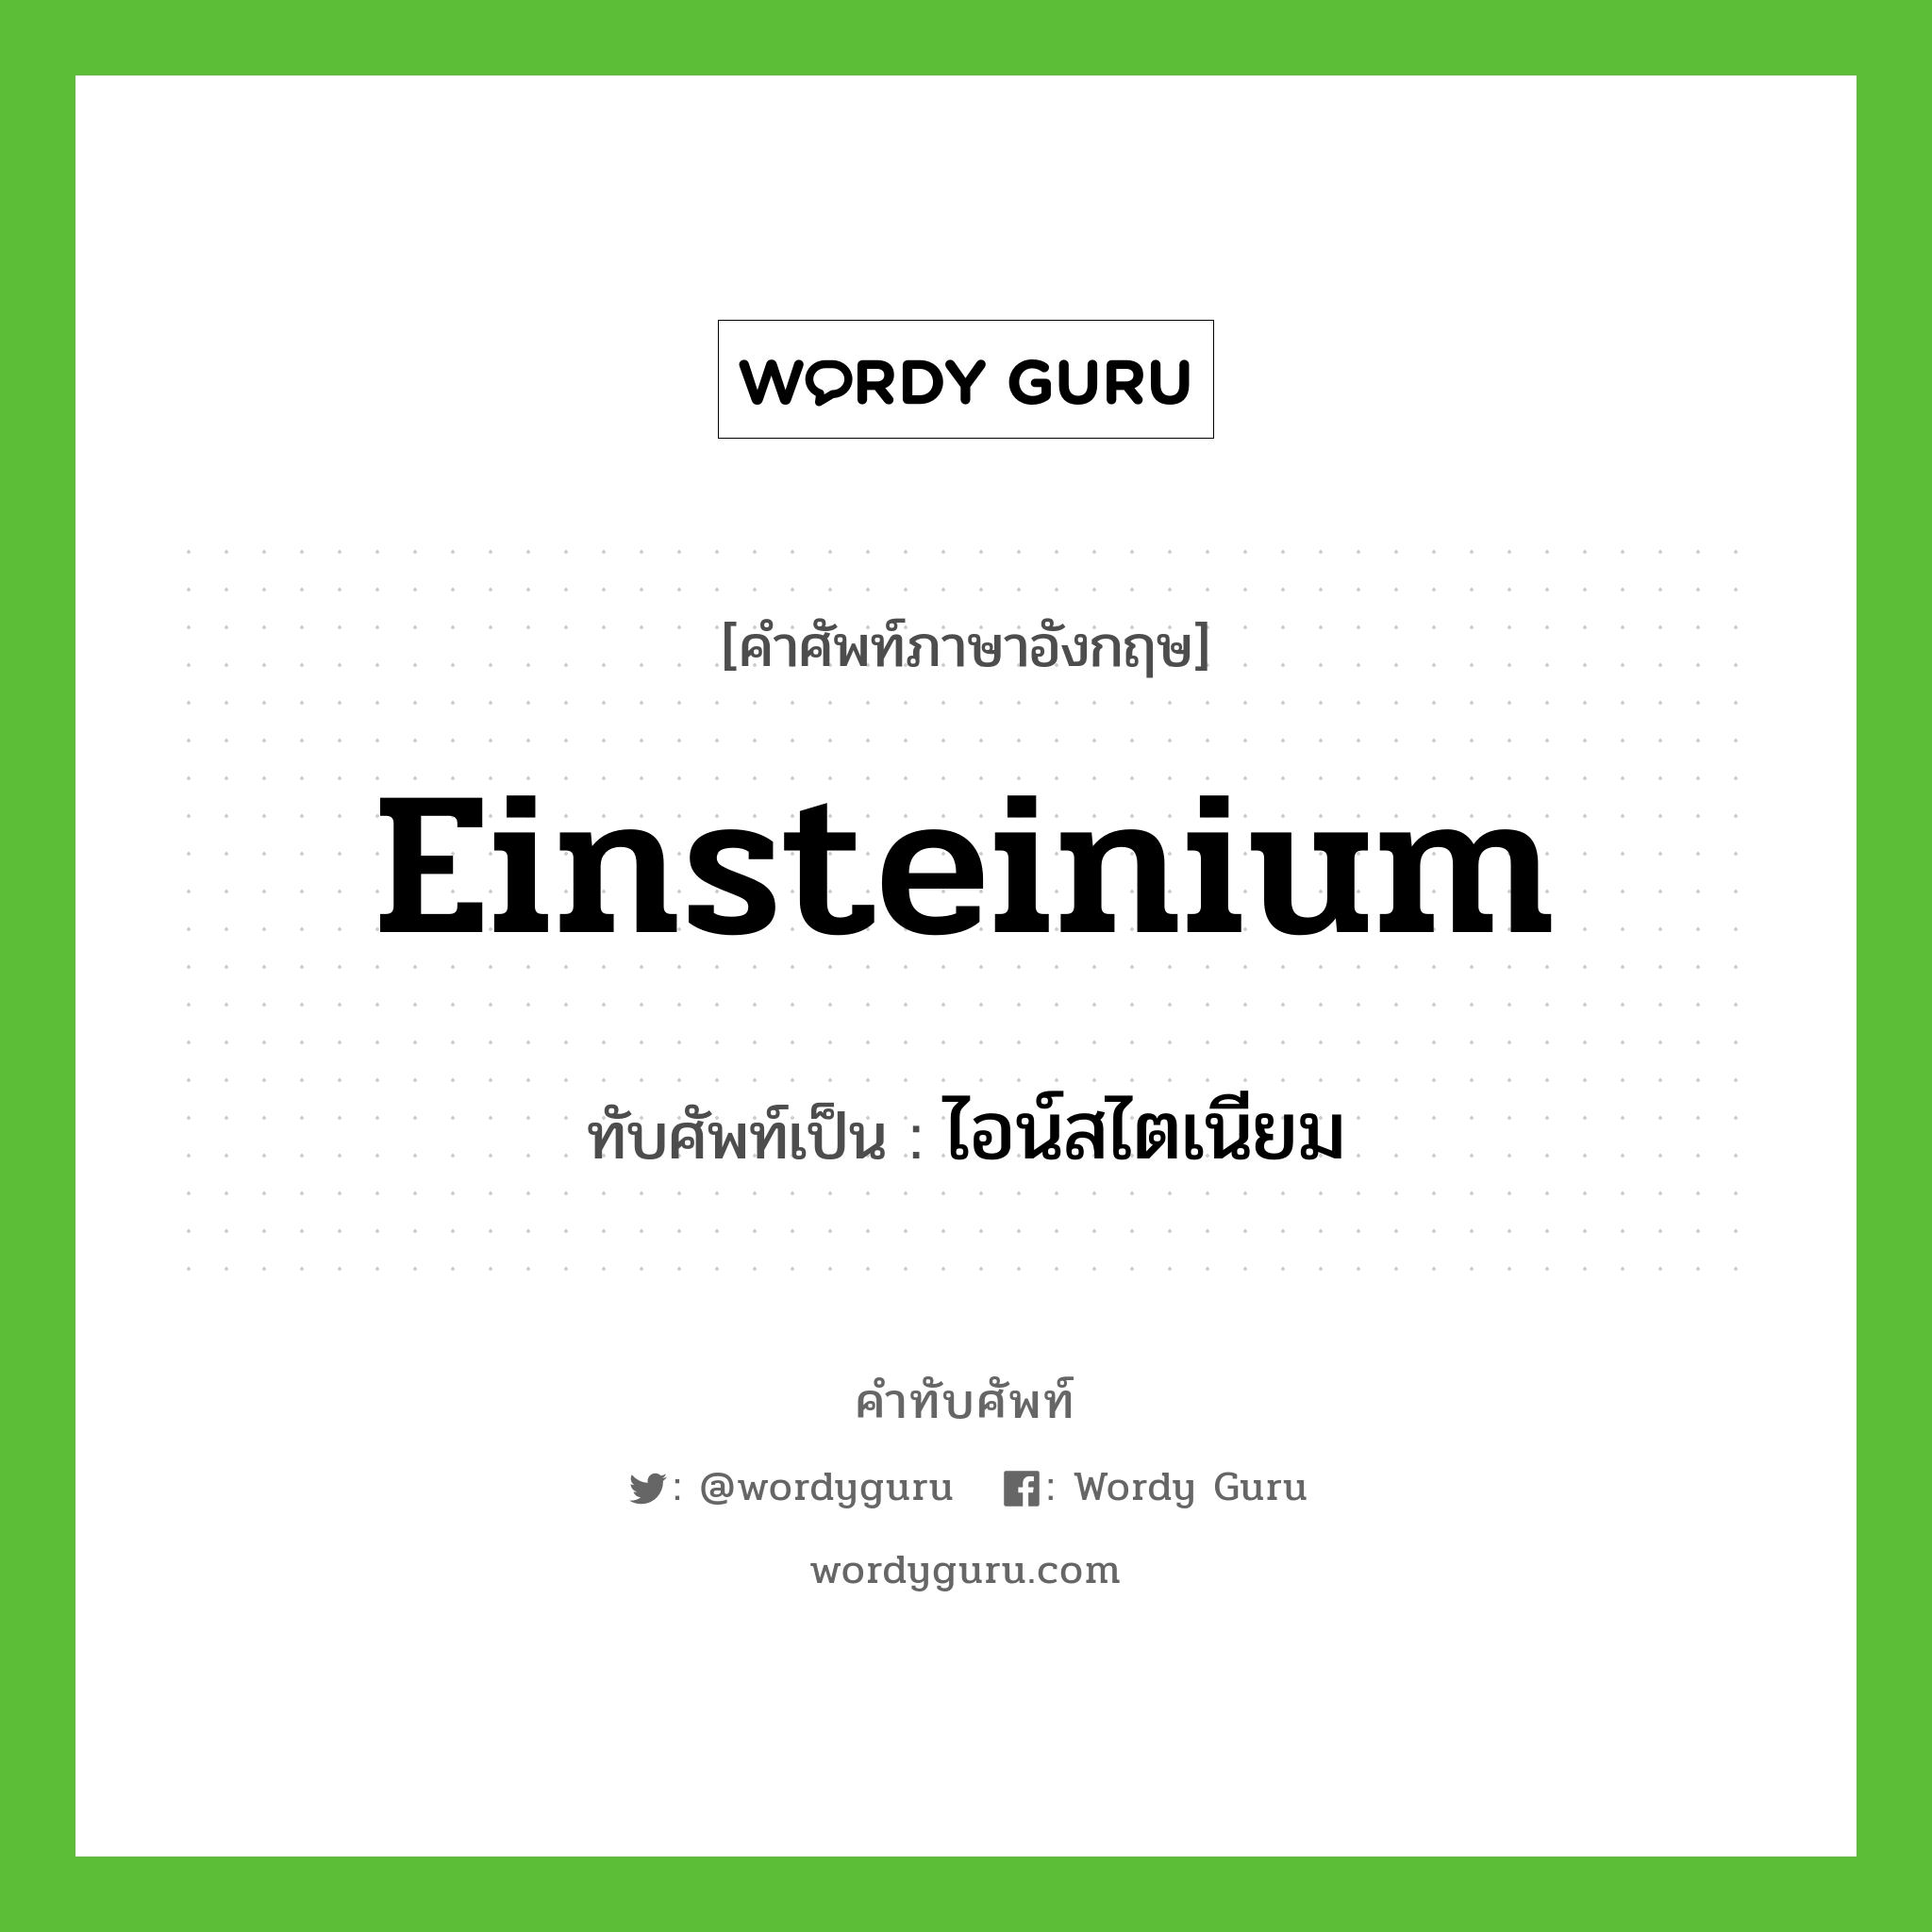 Einsteinium เขียนเป็นคำไทยว่าอะไร?, คำศัพท์ภาษาอังกฤษ Einsteinium ทับศัพท์เป็น ไอน์สไตเนียม